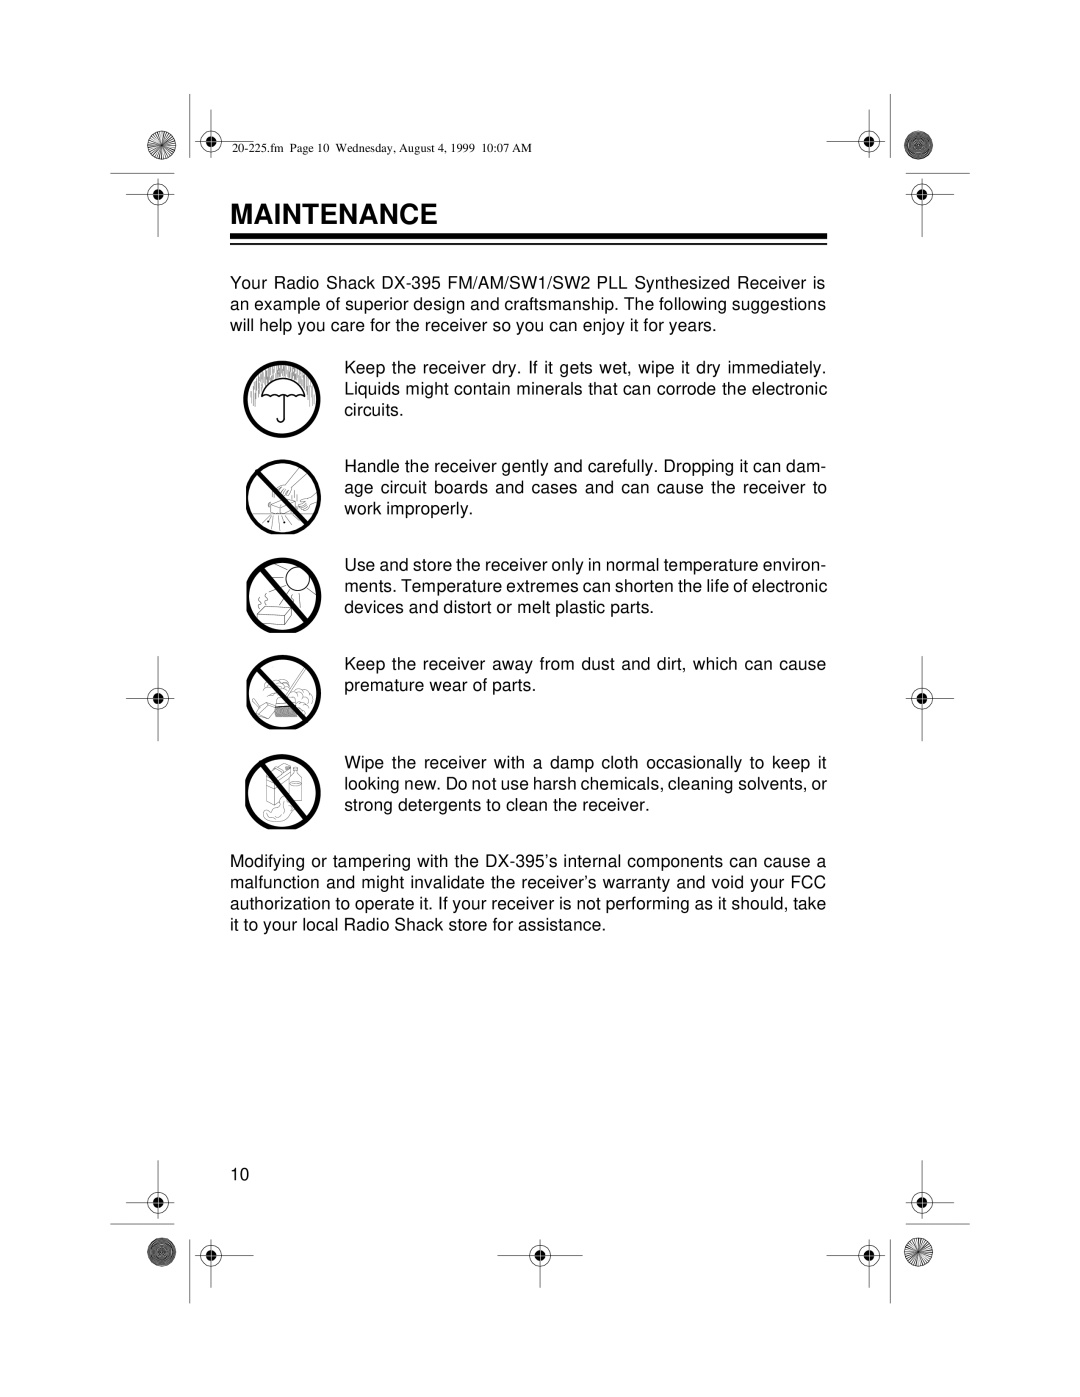 Radio Shack DX-395 owner manual Maintenance 